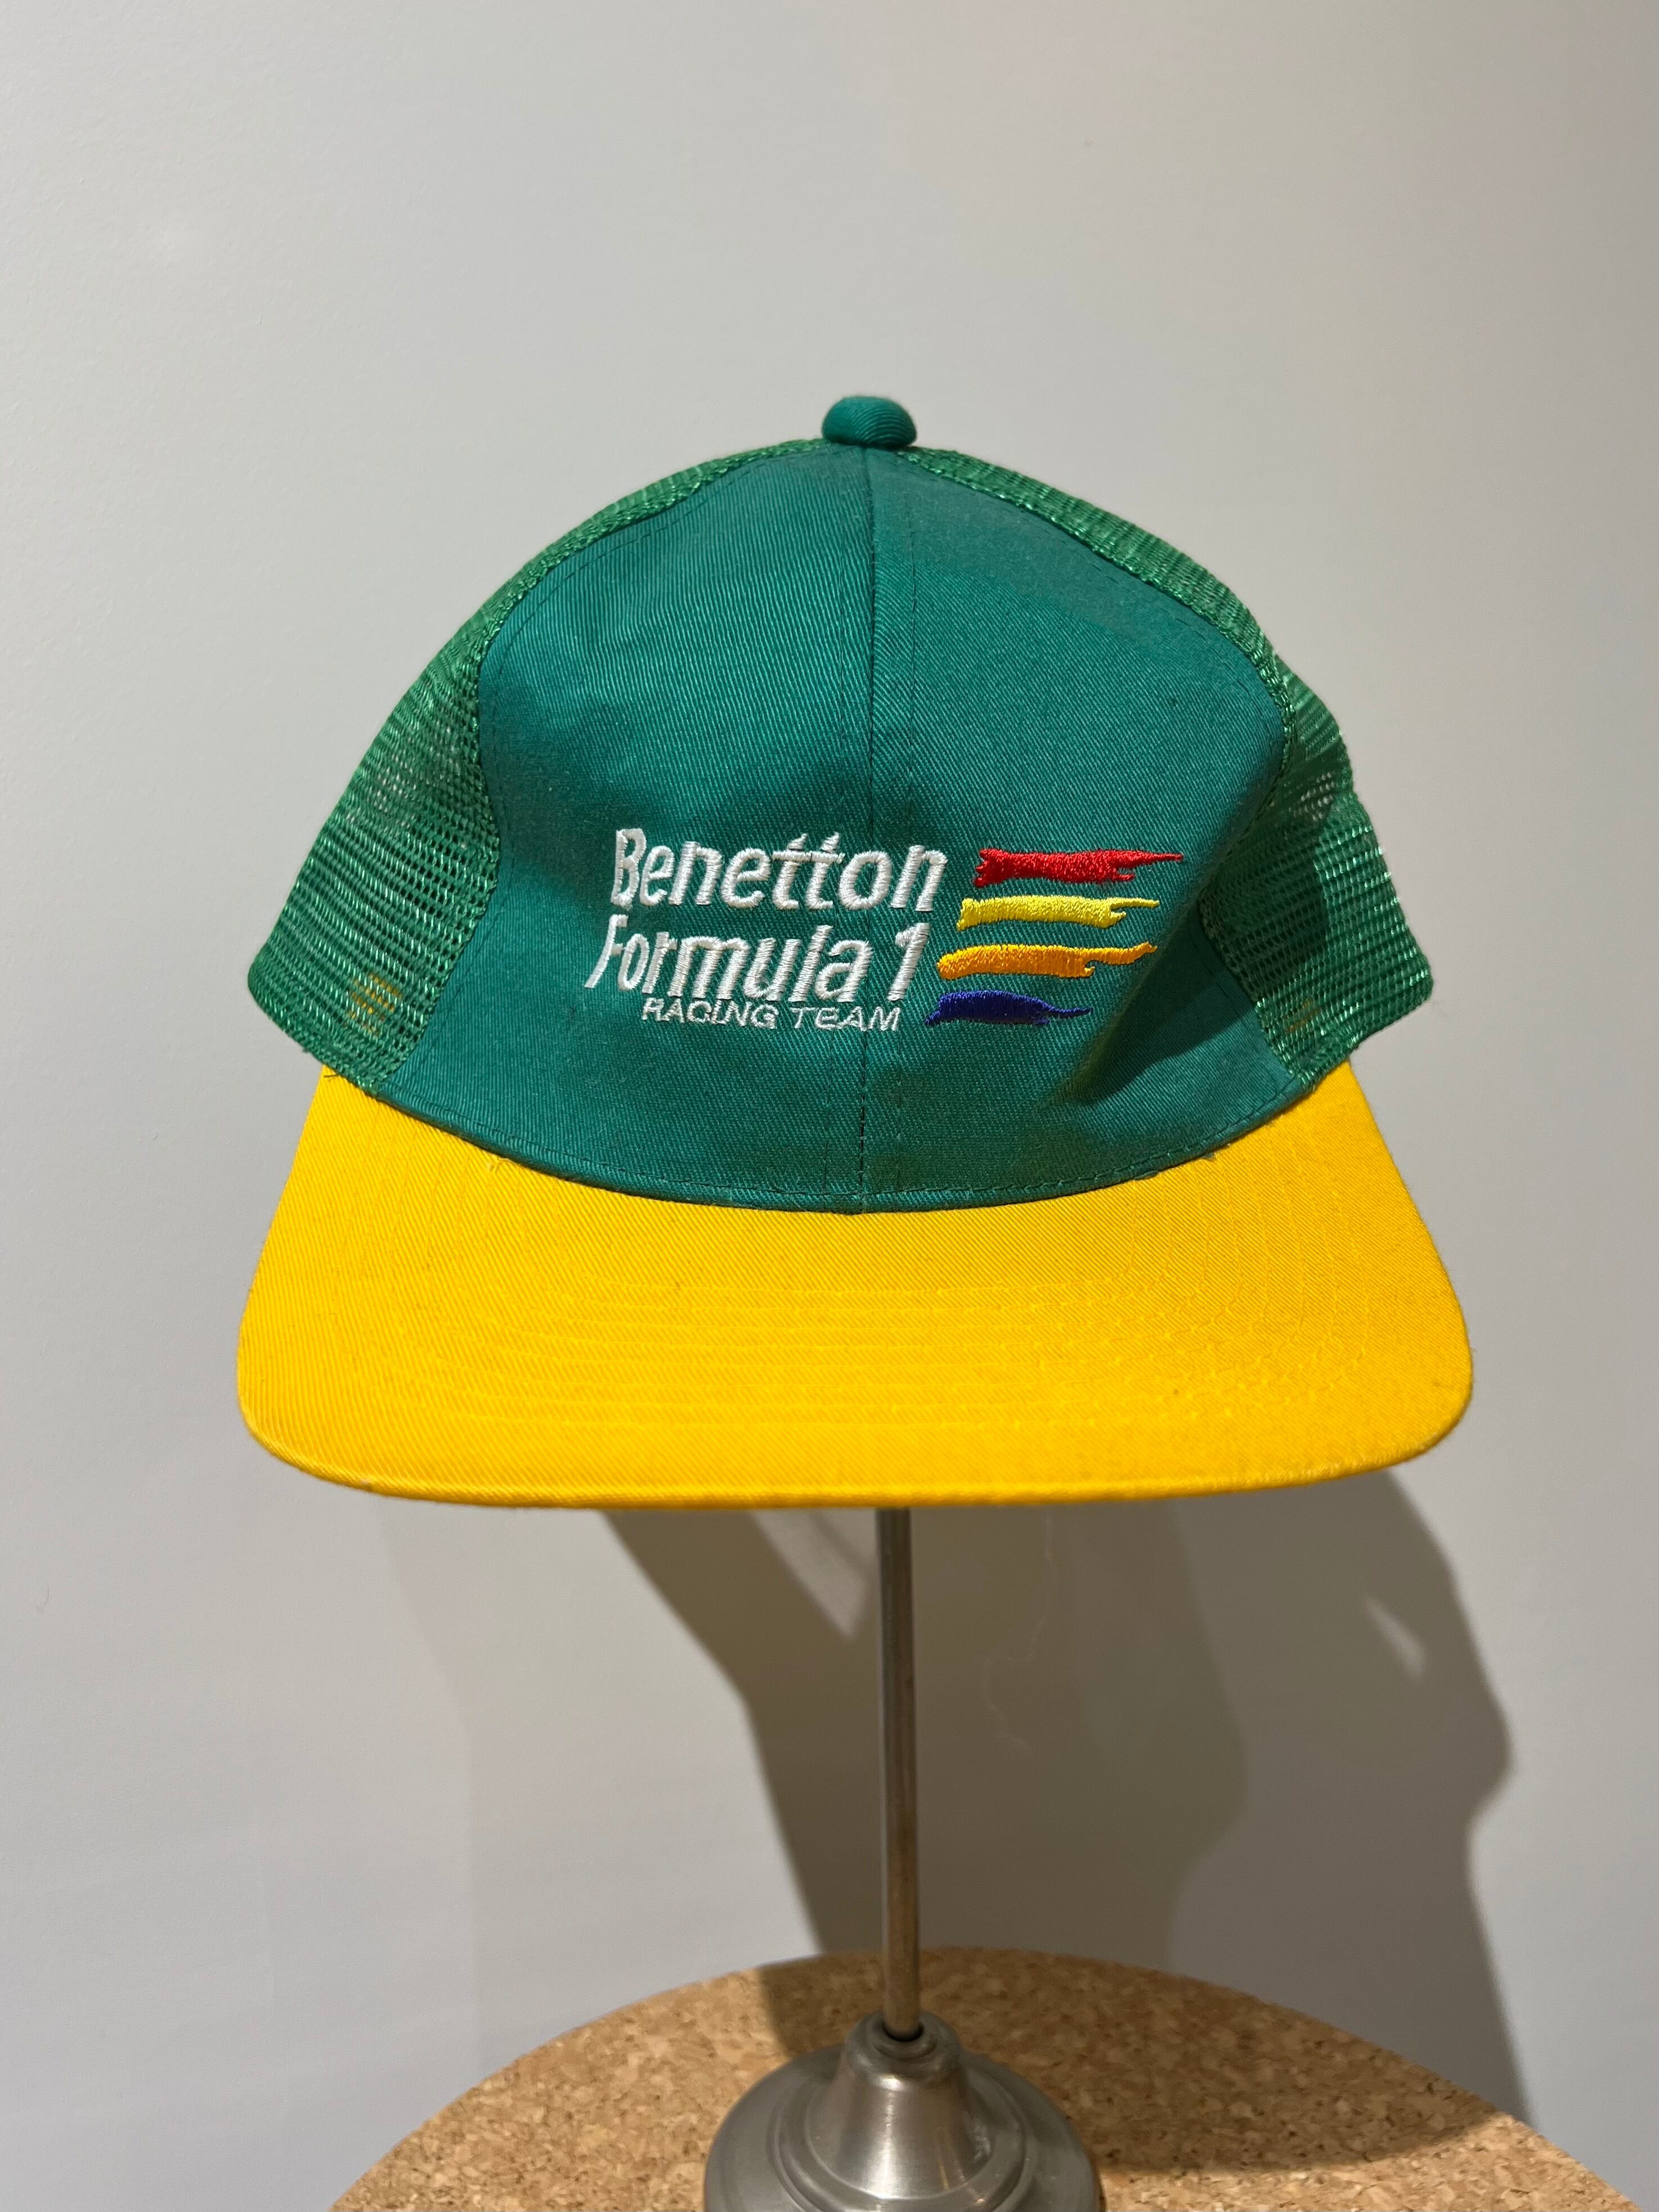 （AC116）Benetton Green Mesh Cap